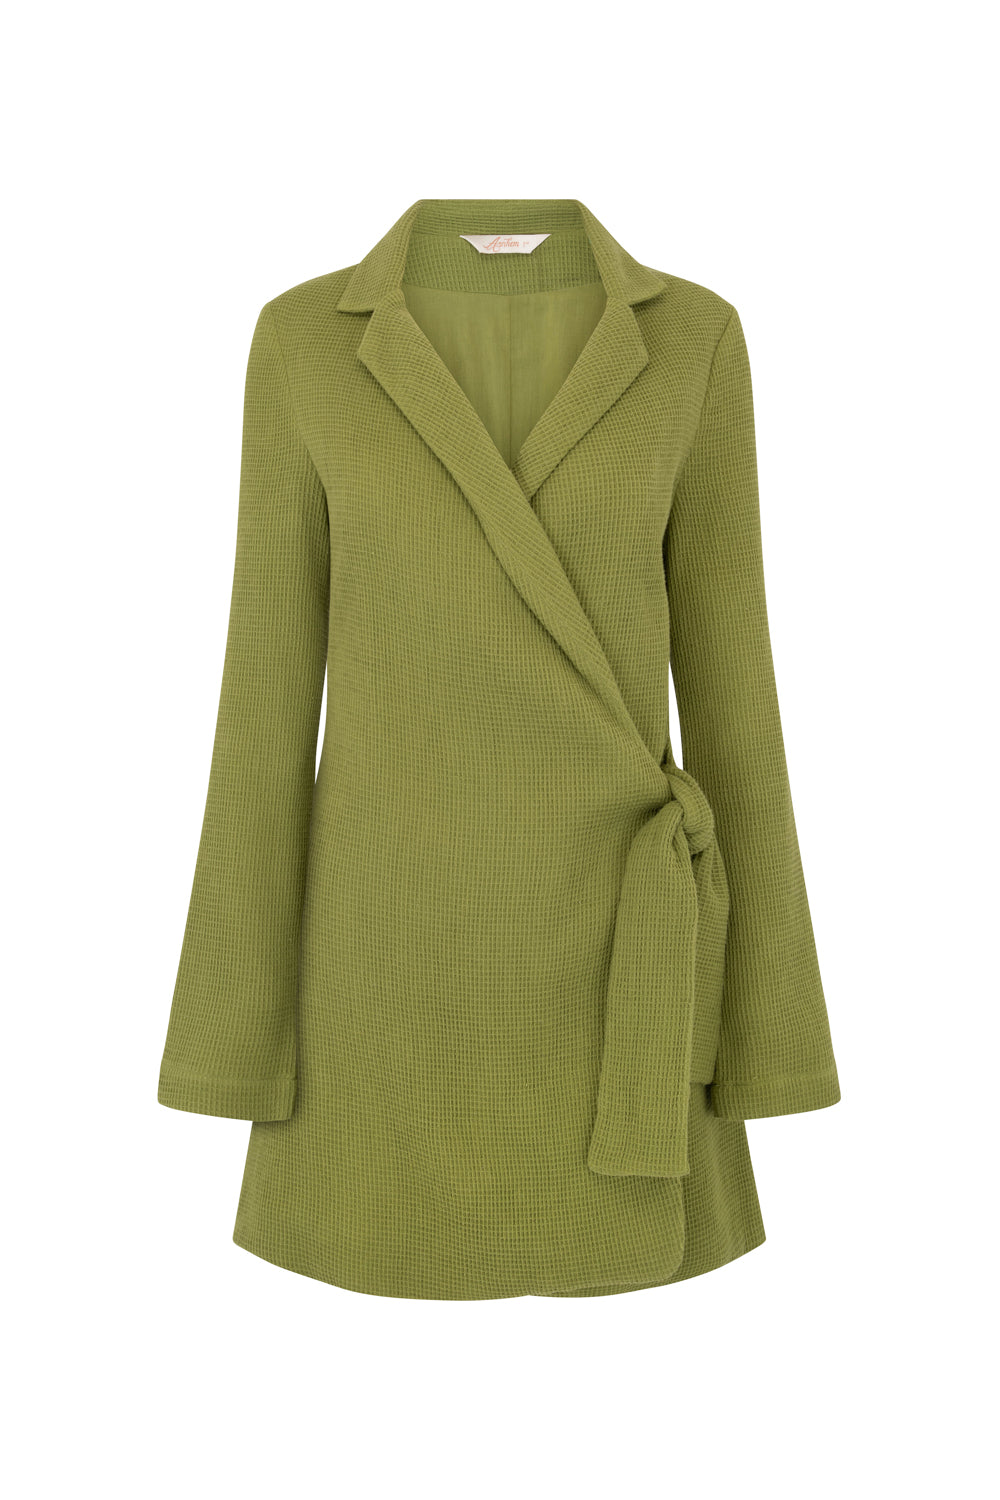 Maya Wrap Dress in Olive – Arnhem Clothing